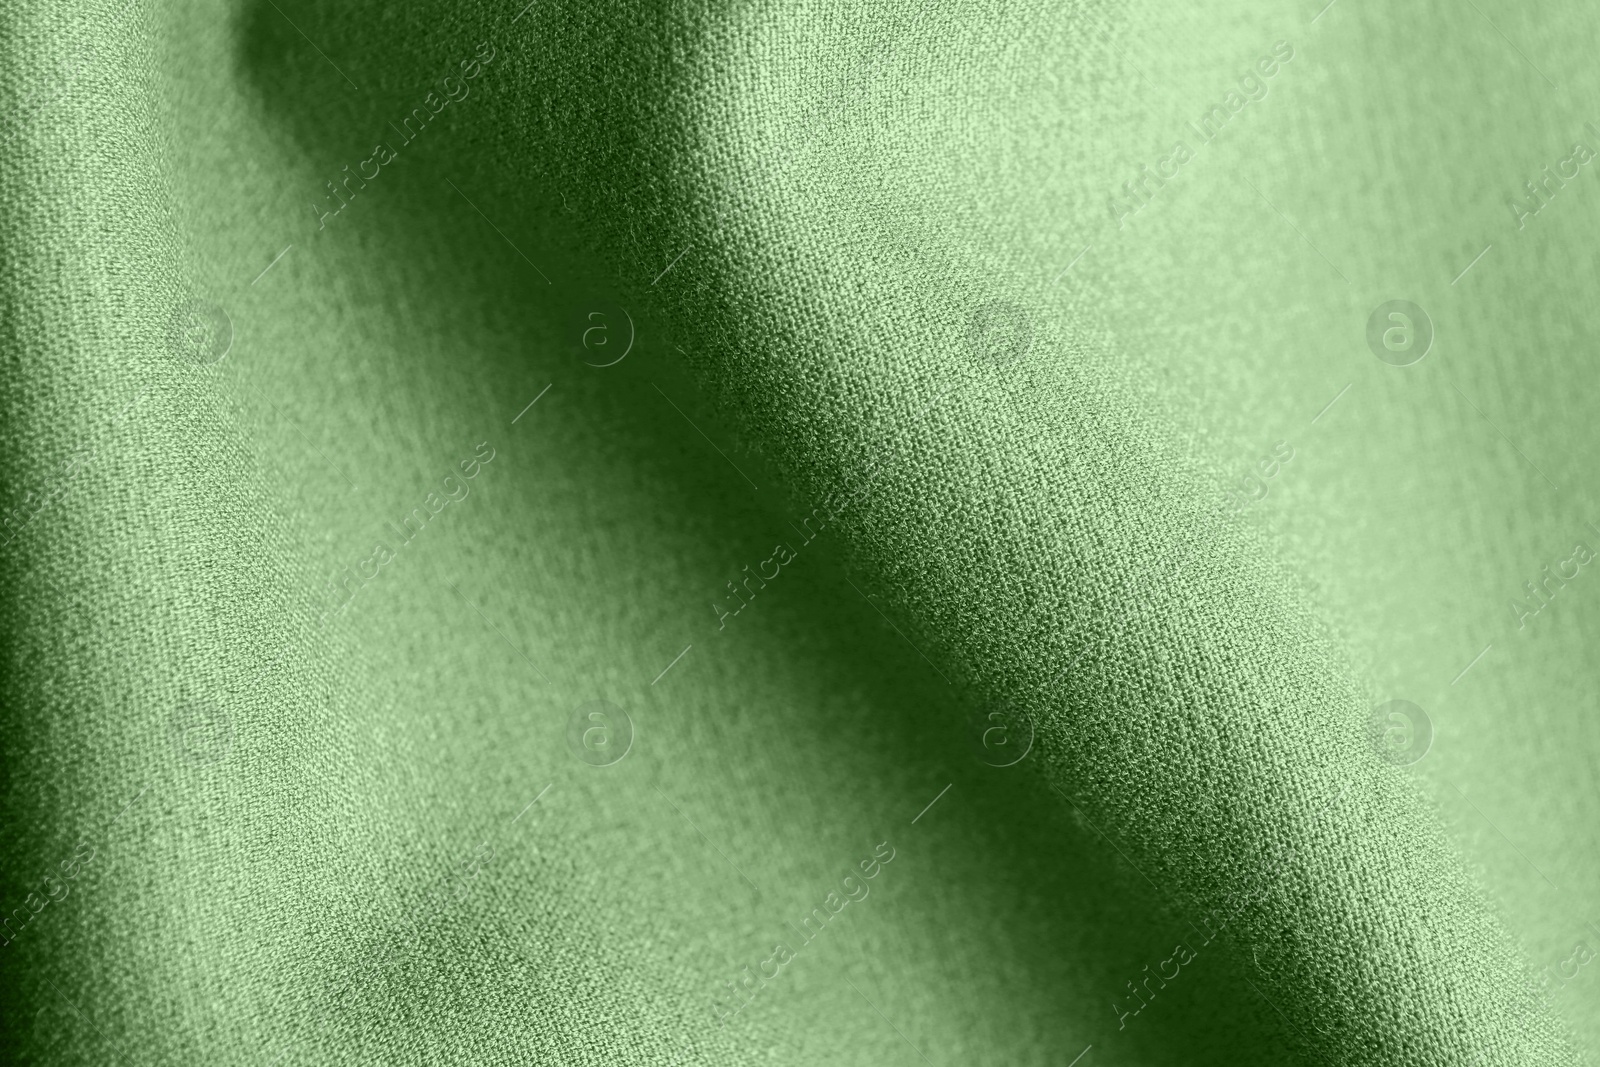 Image of Beautiful sage green fabric as background, closeup